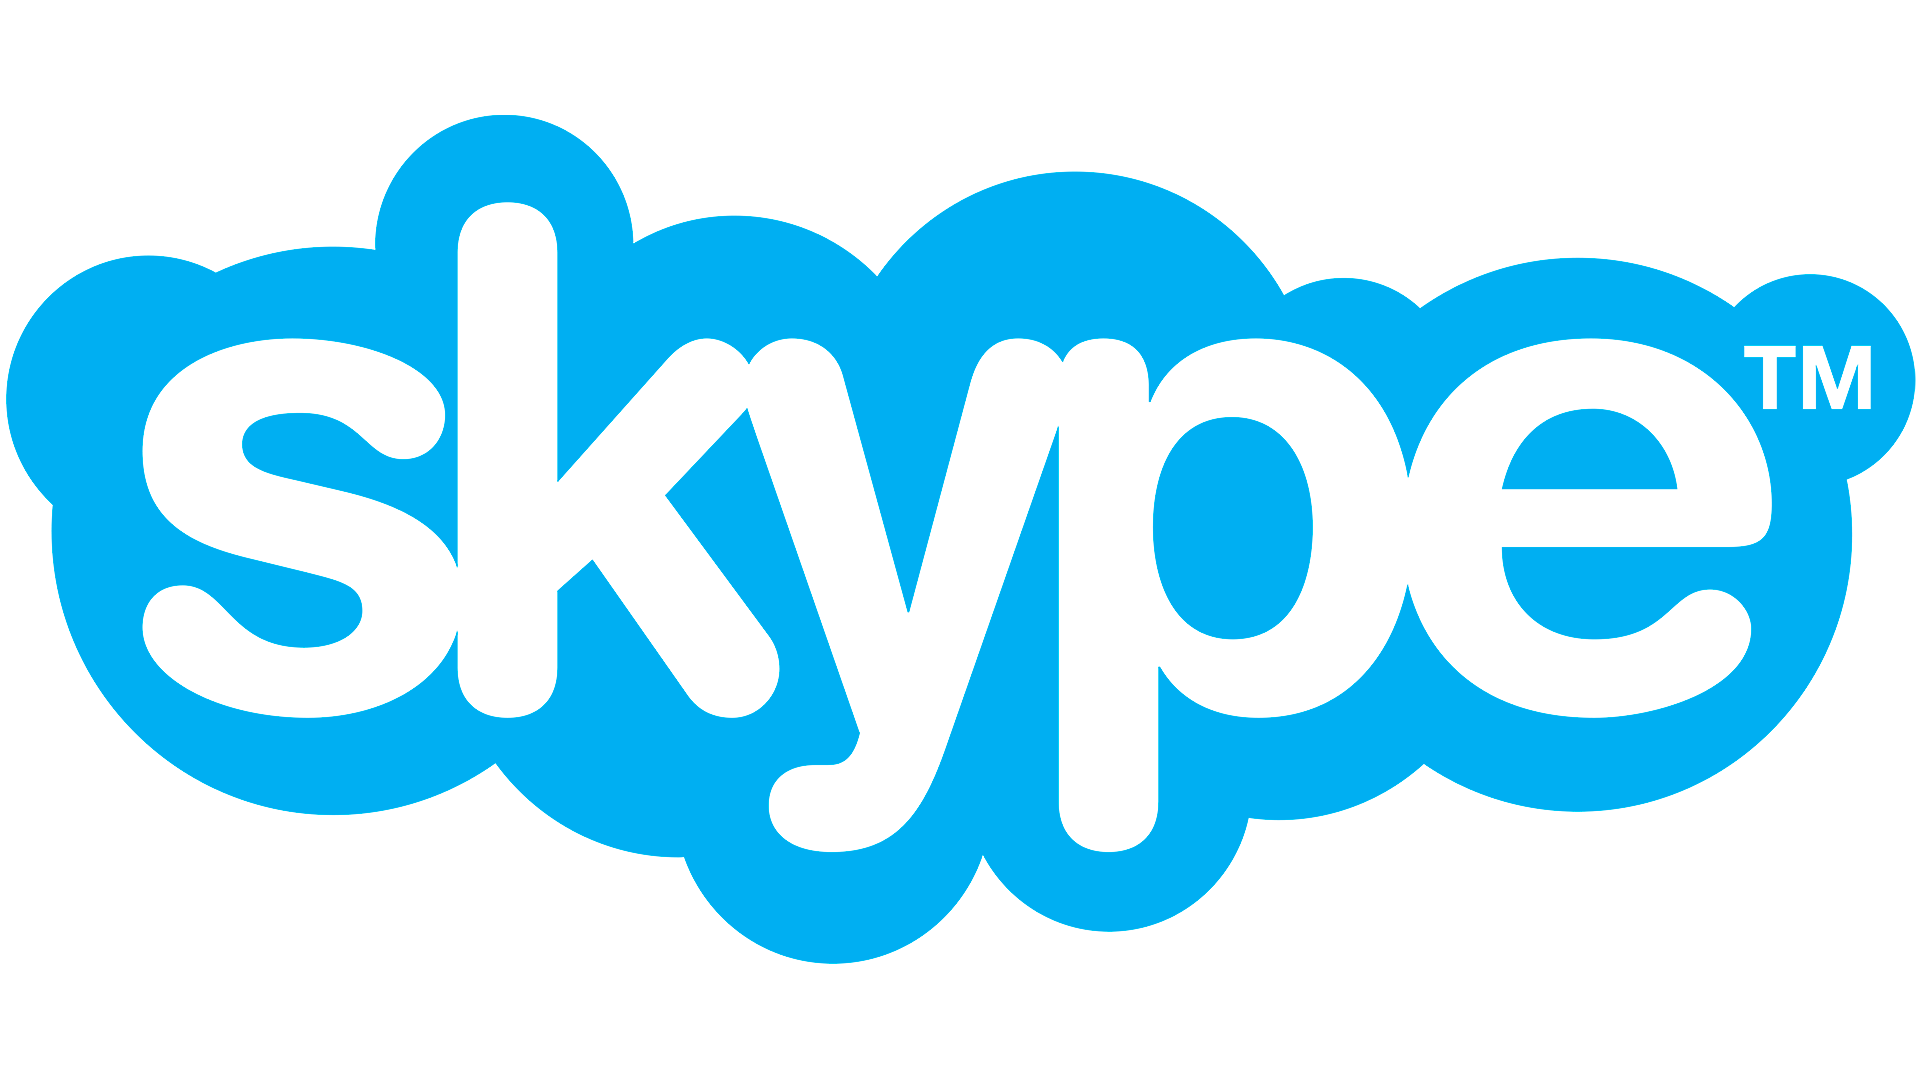 skype logo changes